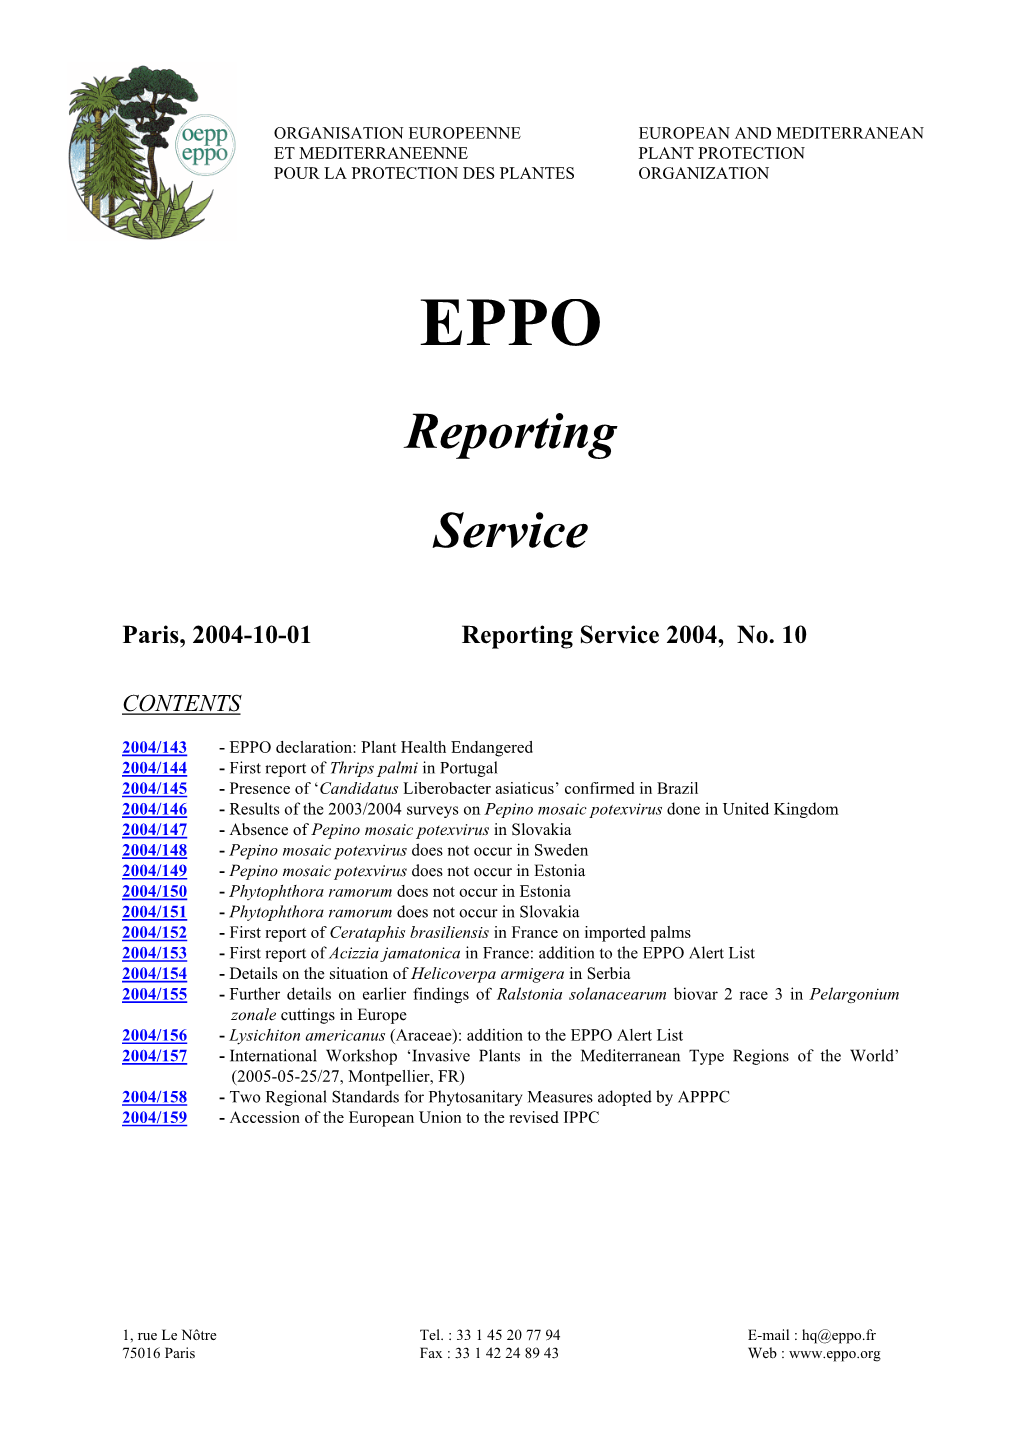 Reporting Service 2004, No